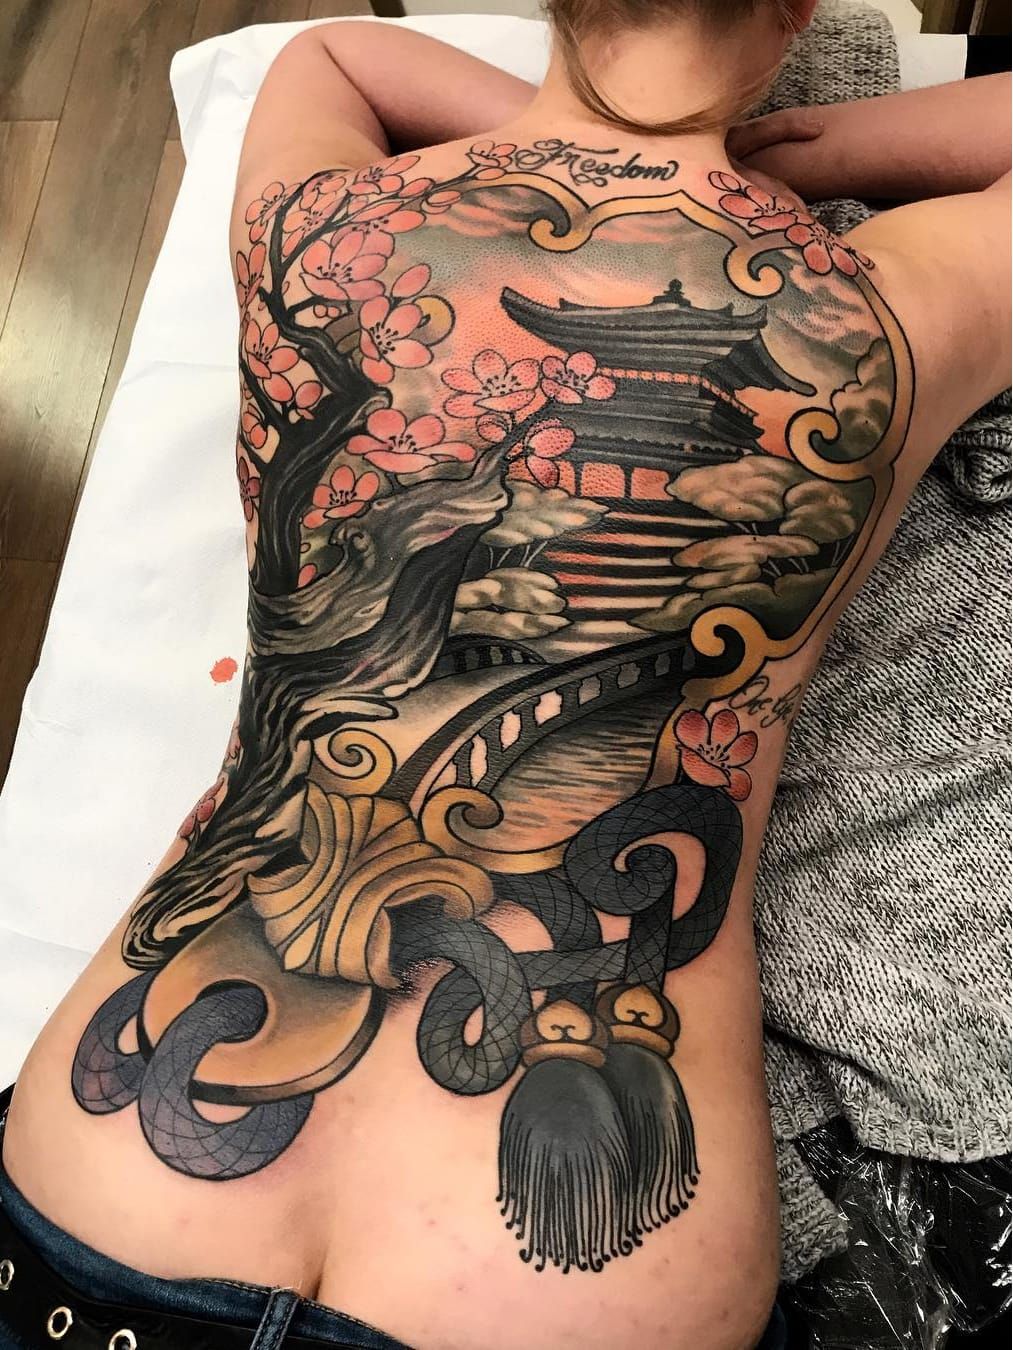 Bodysuit in progress —Traditional tattoo by @ronaldogrecco  traditionaljapanese #japanesetraditional #japanese #japanesetattoo #tattoo  #